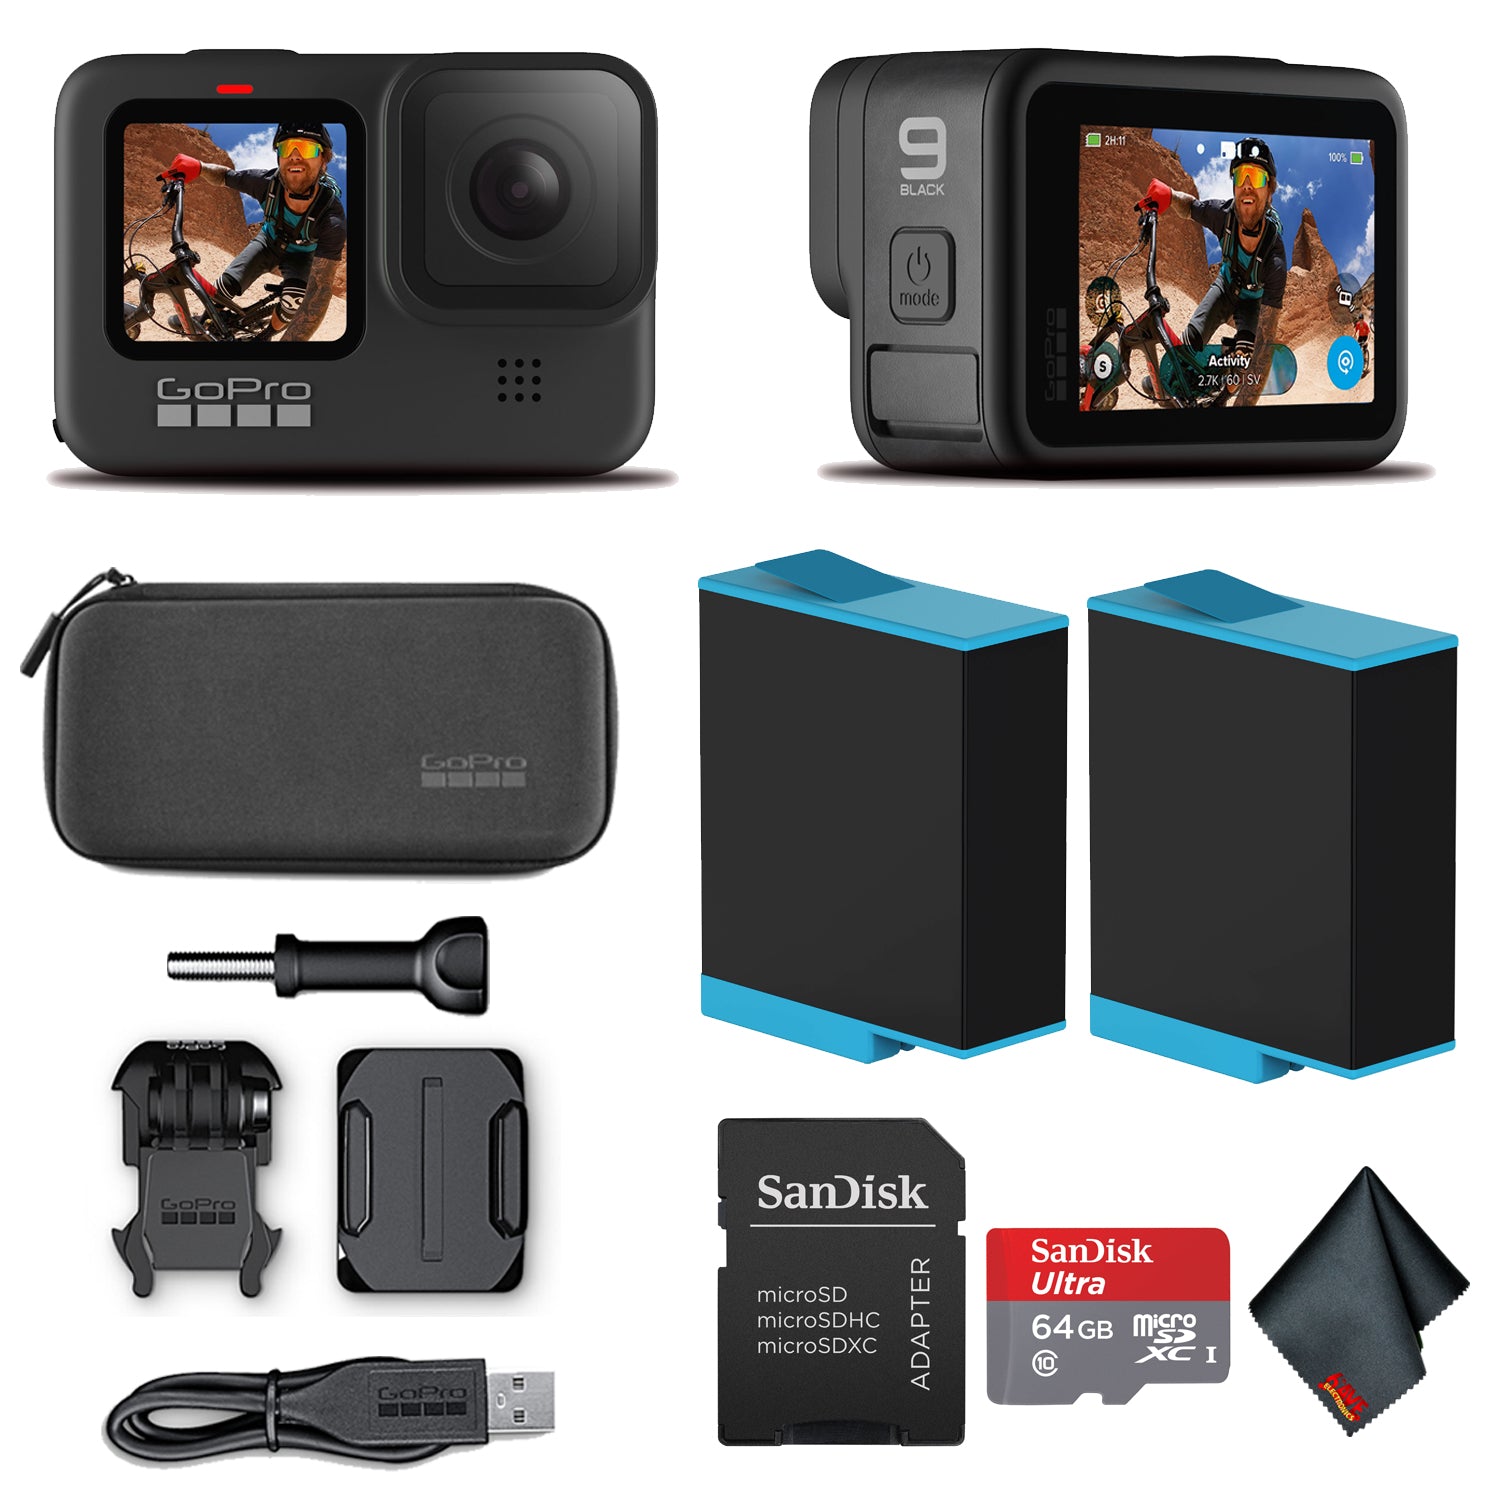 GoPro HERO9 Black - Waterproof Action Camera + 64GB Card and Extra HERO9 Battery